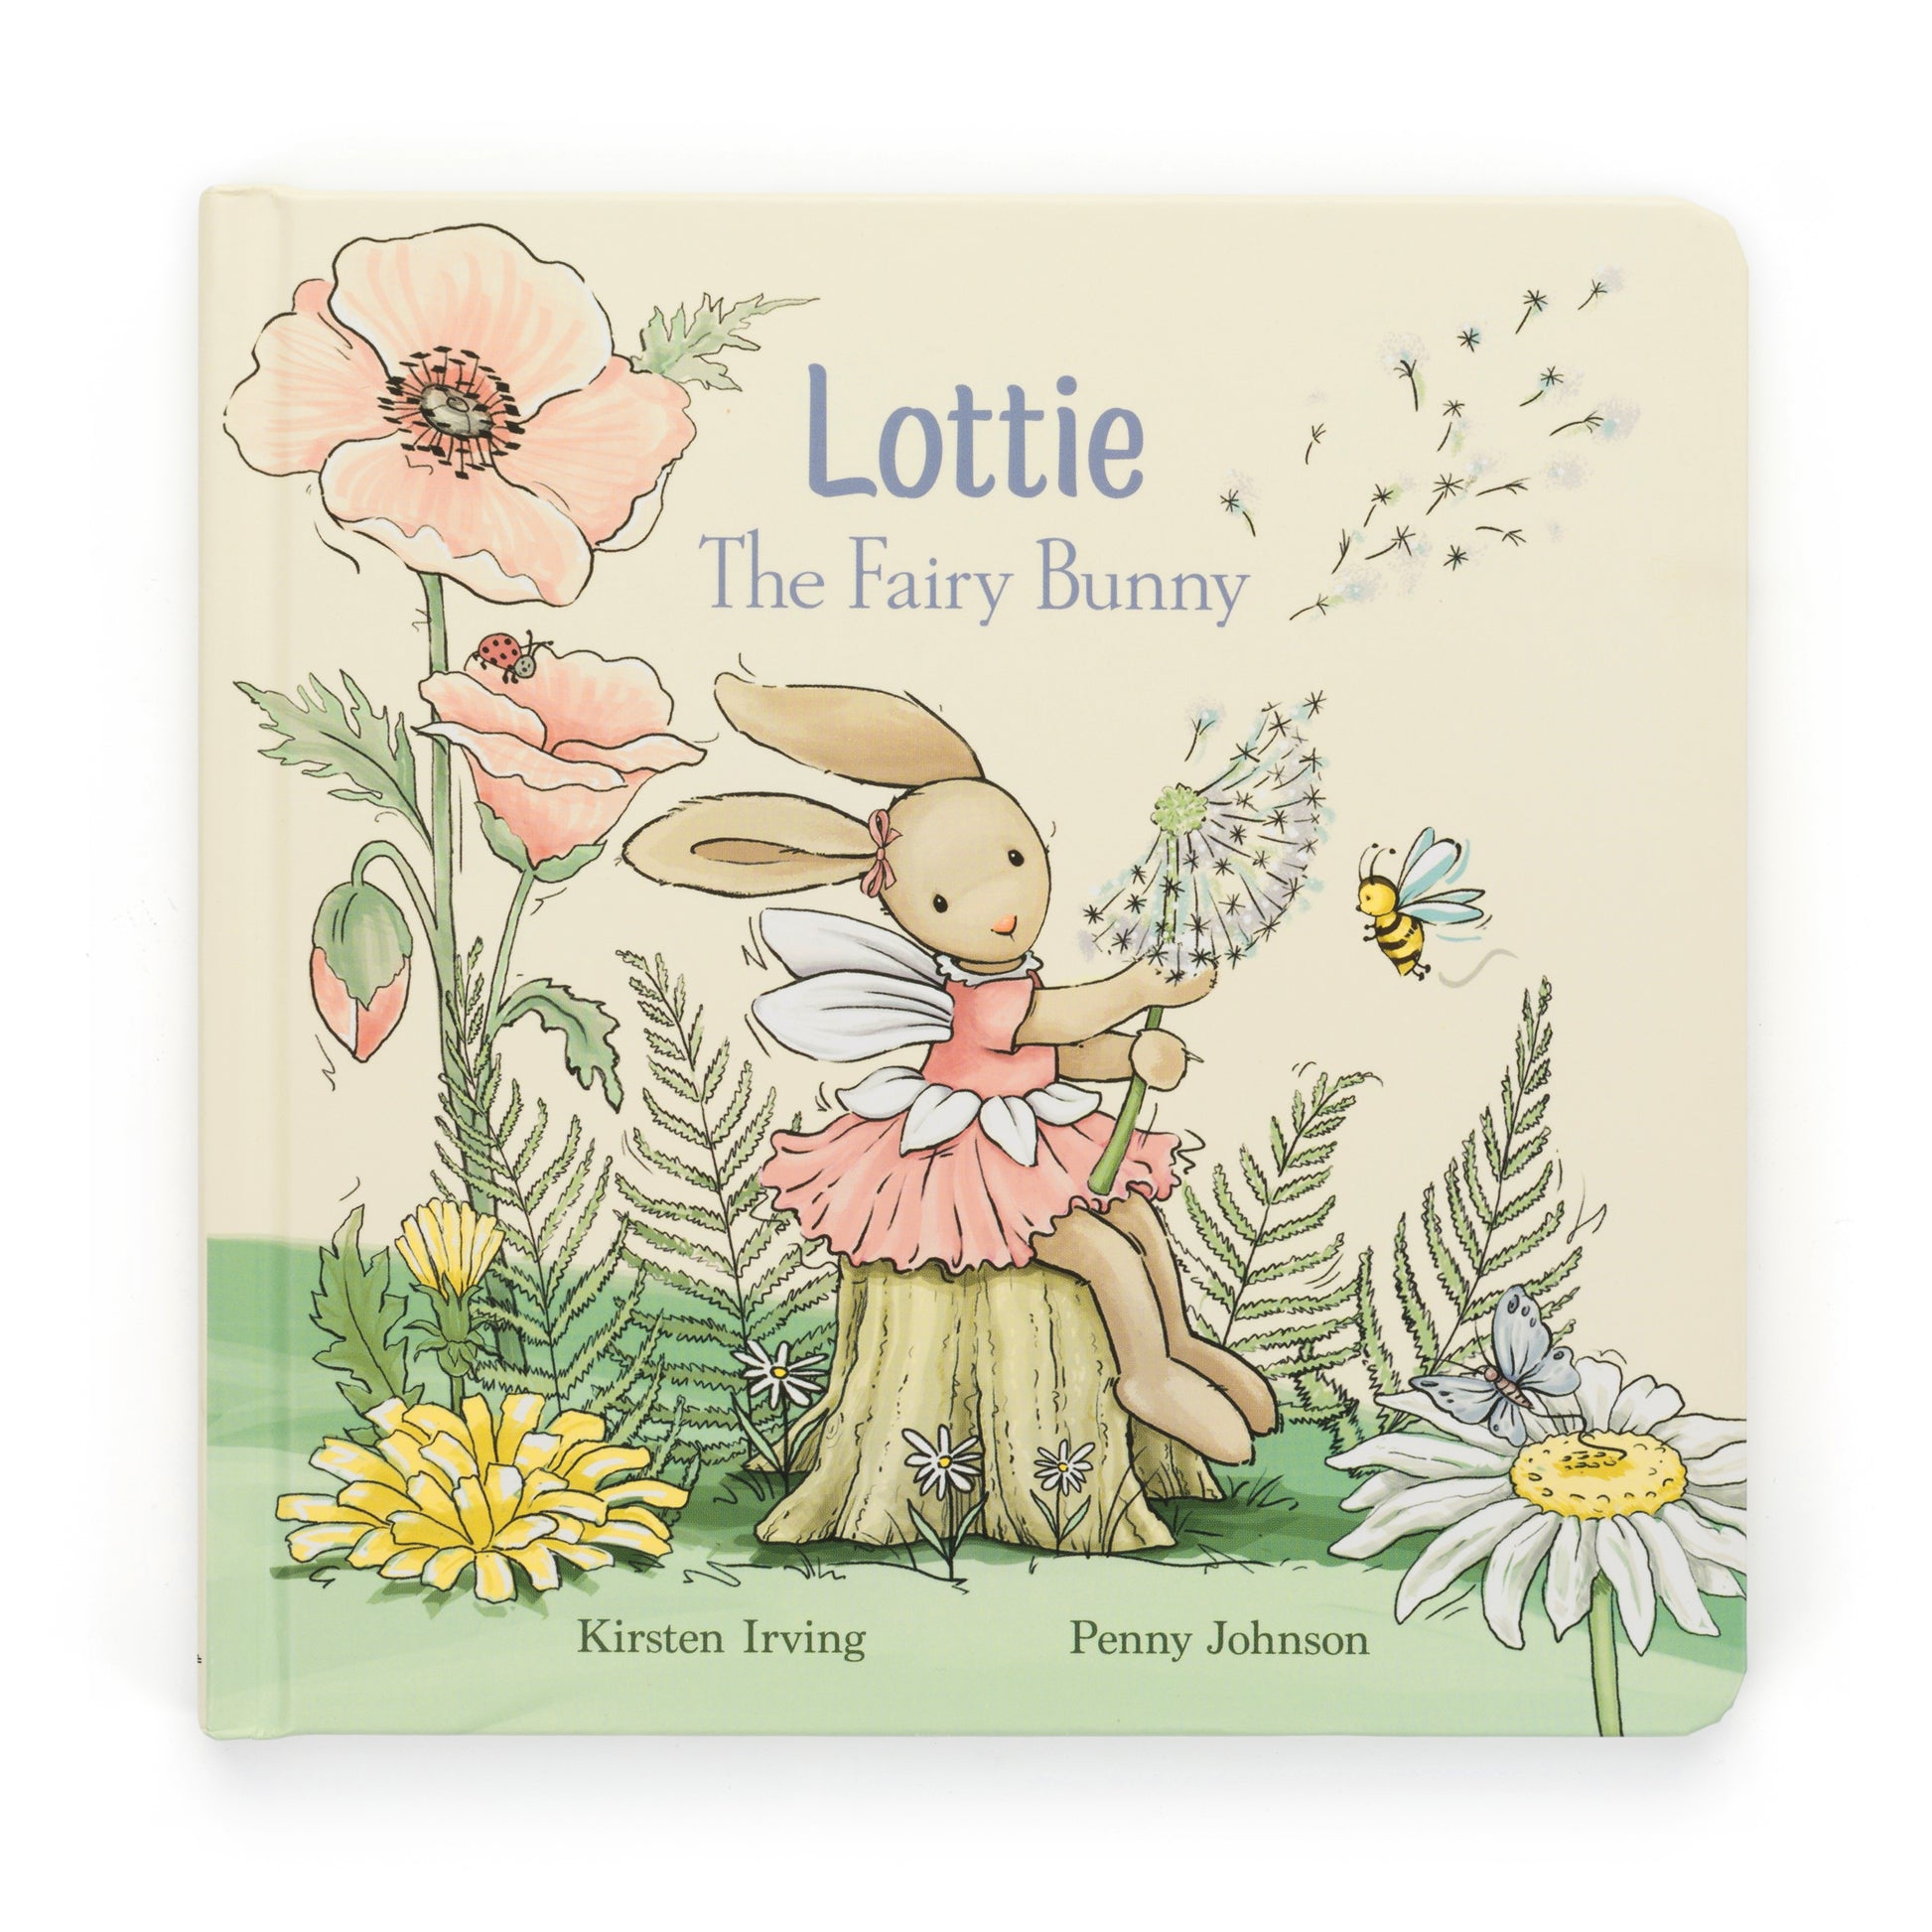 "Lottie the Fairy Bunny" Children's Book"